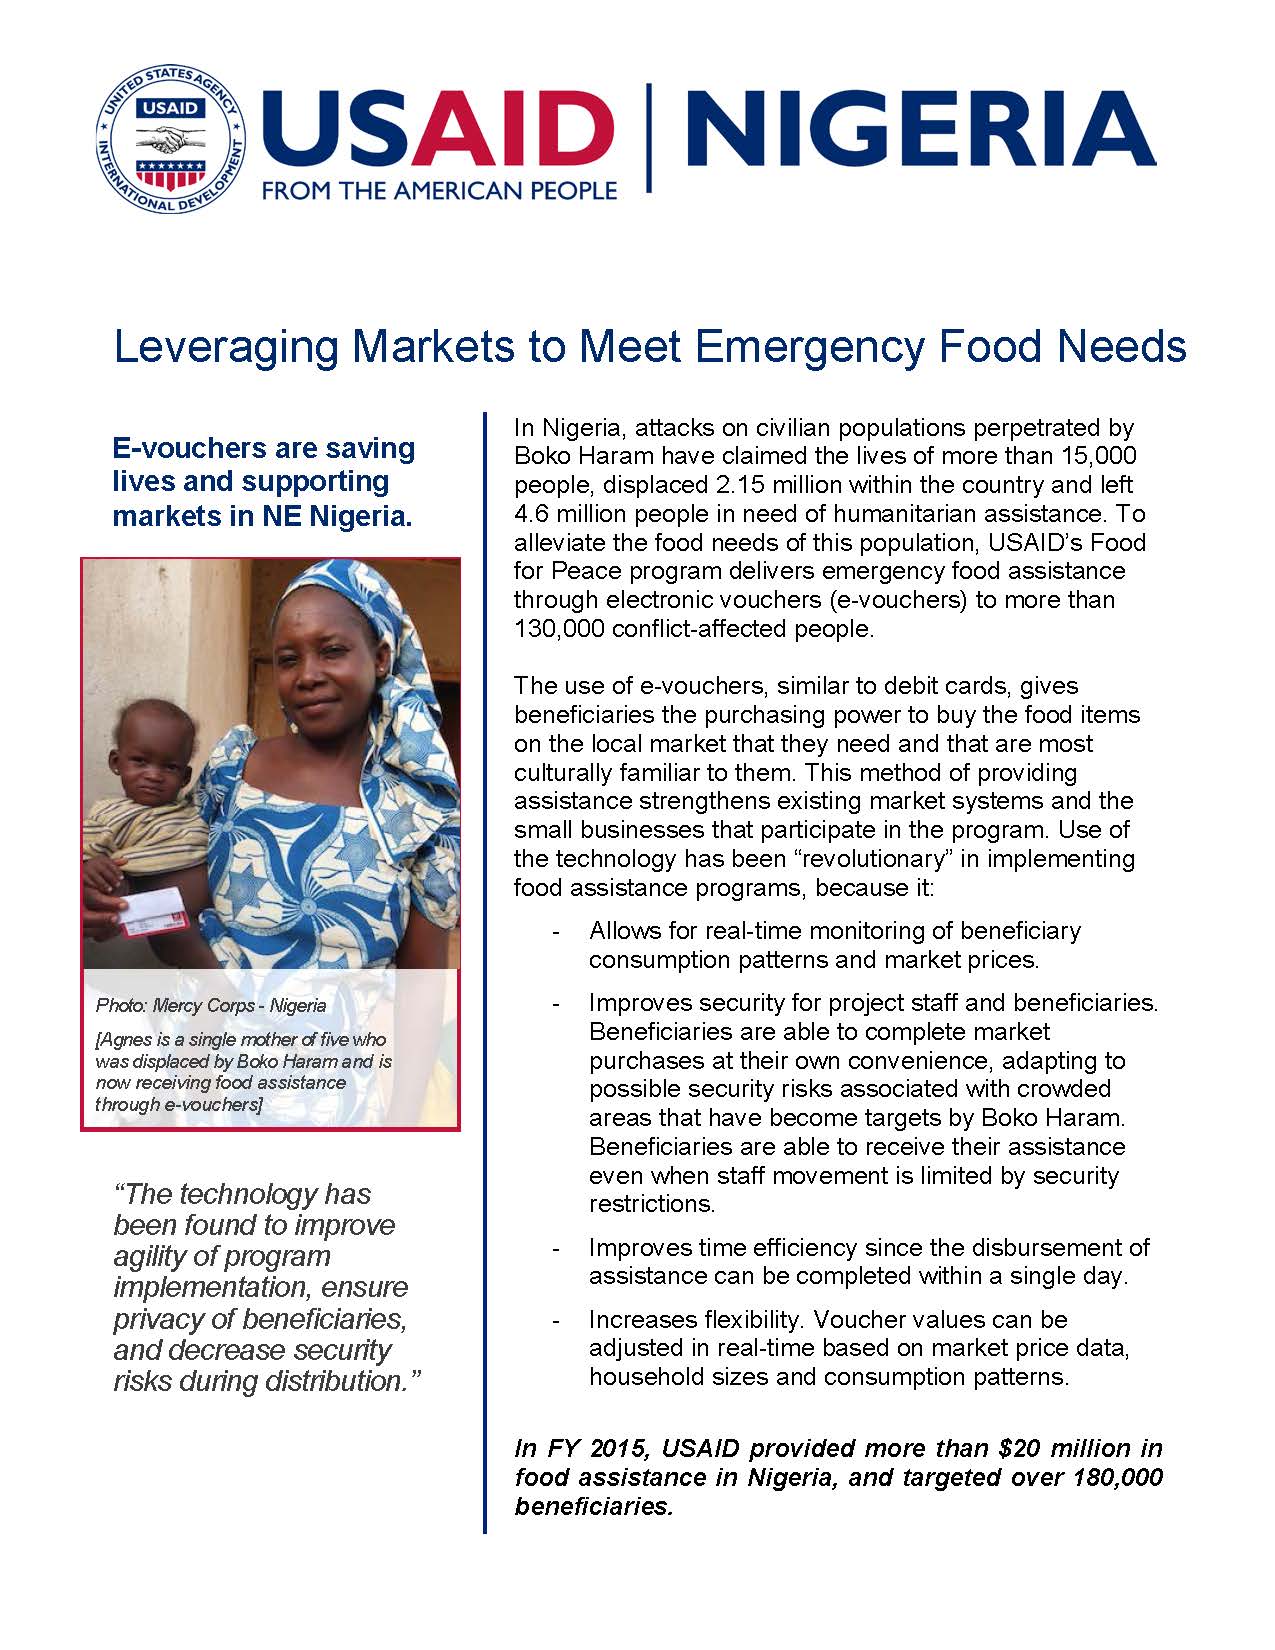 Nigeria - Leveraging Markets to Meet Emergency Food Needs